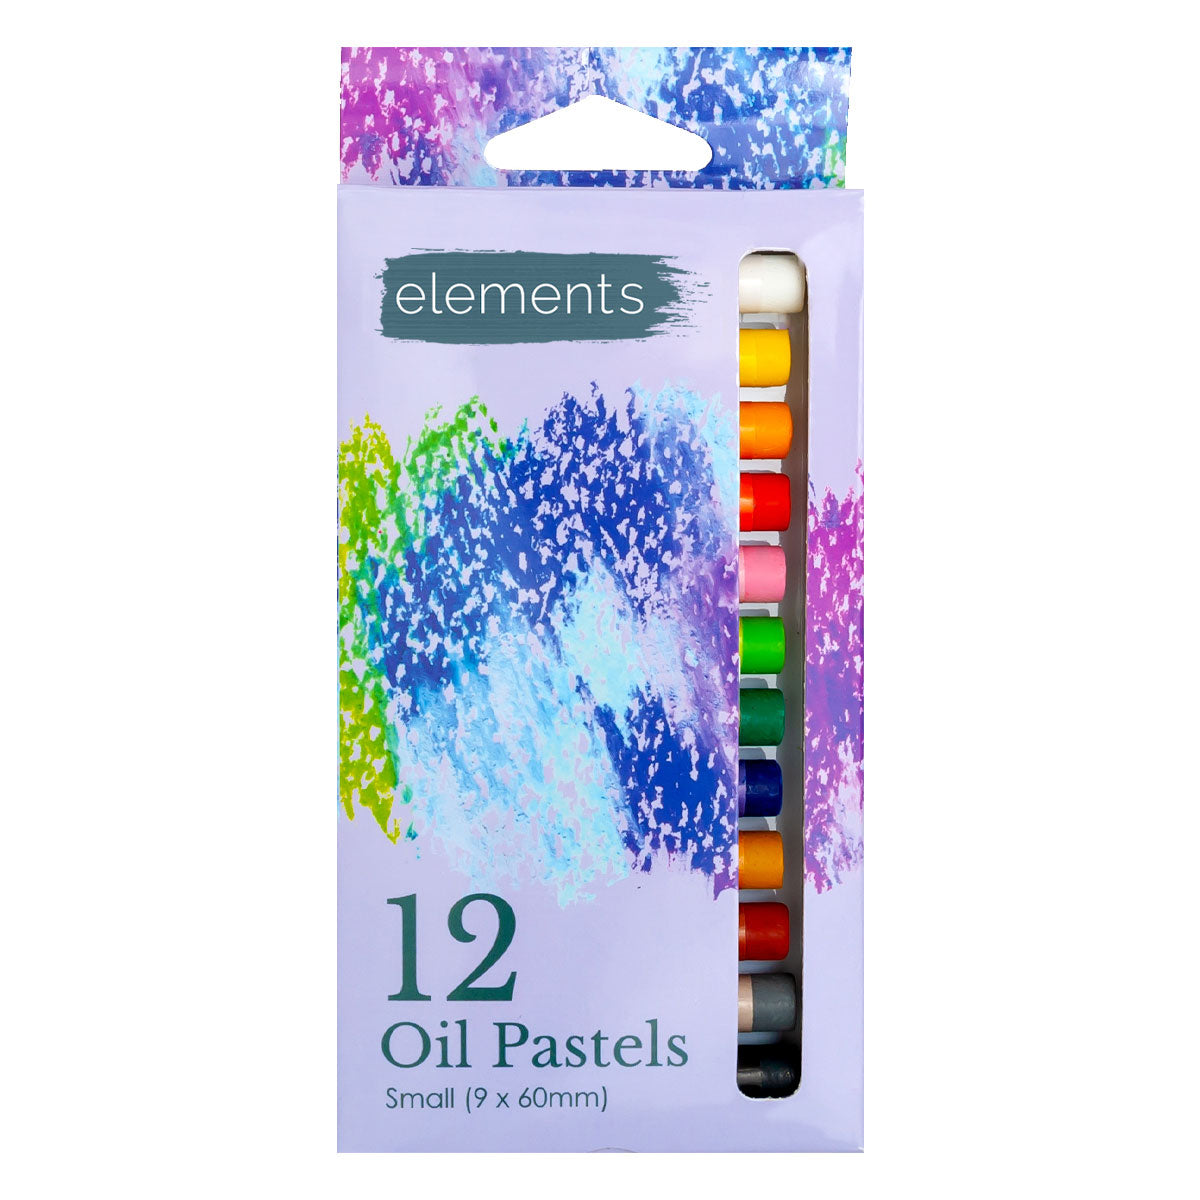 Elements Slim Oil Pastels 12 Pack